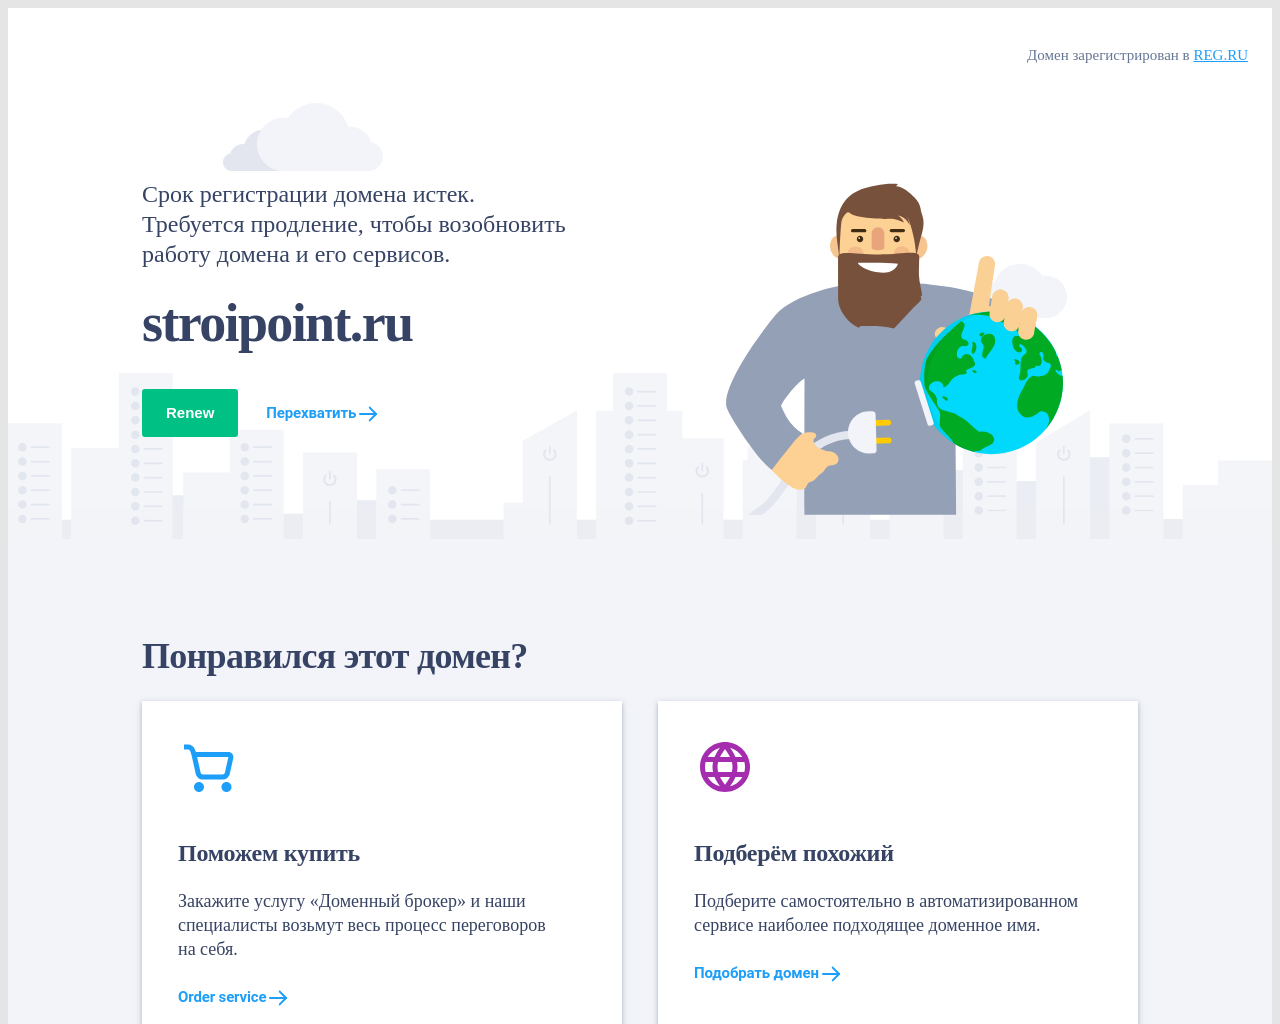 stroipoint.ru